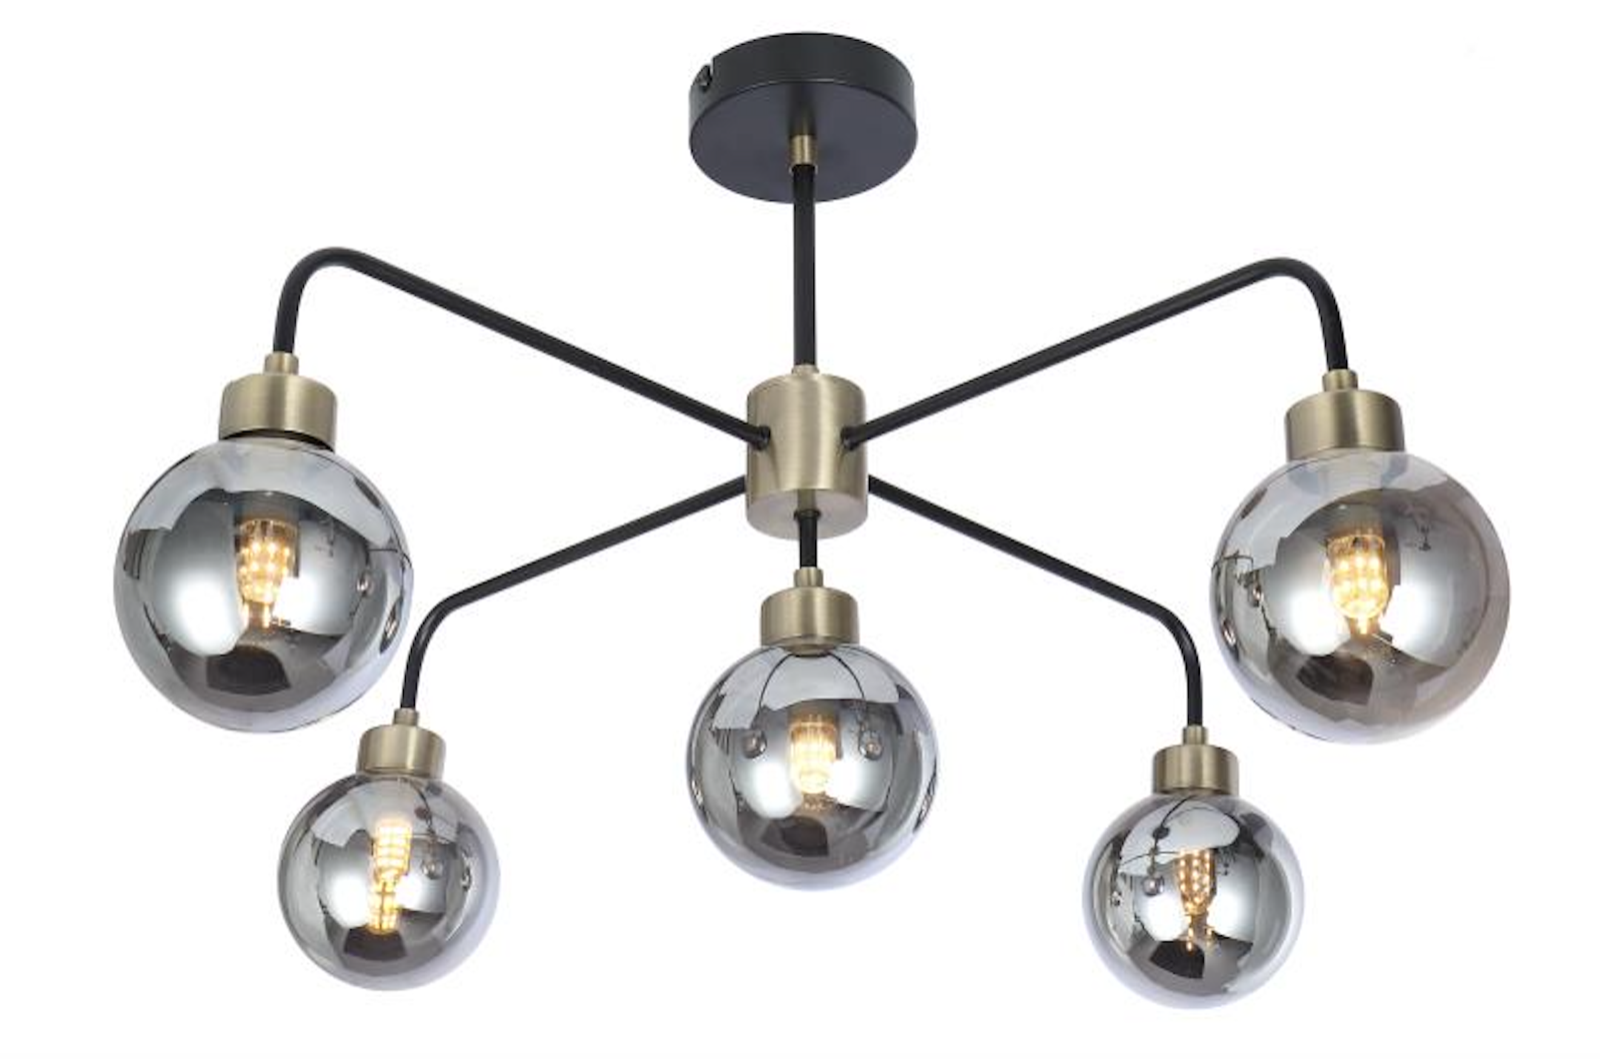 Globe Metal ceiling Light Fitting 5 Way Industrial Design Black/Antique Brass UKEW